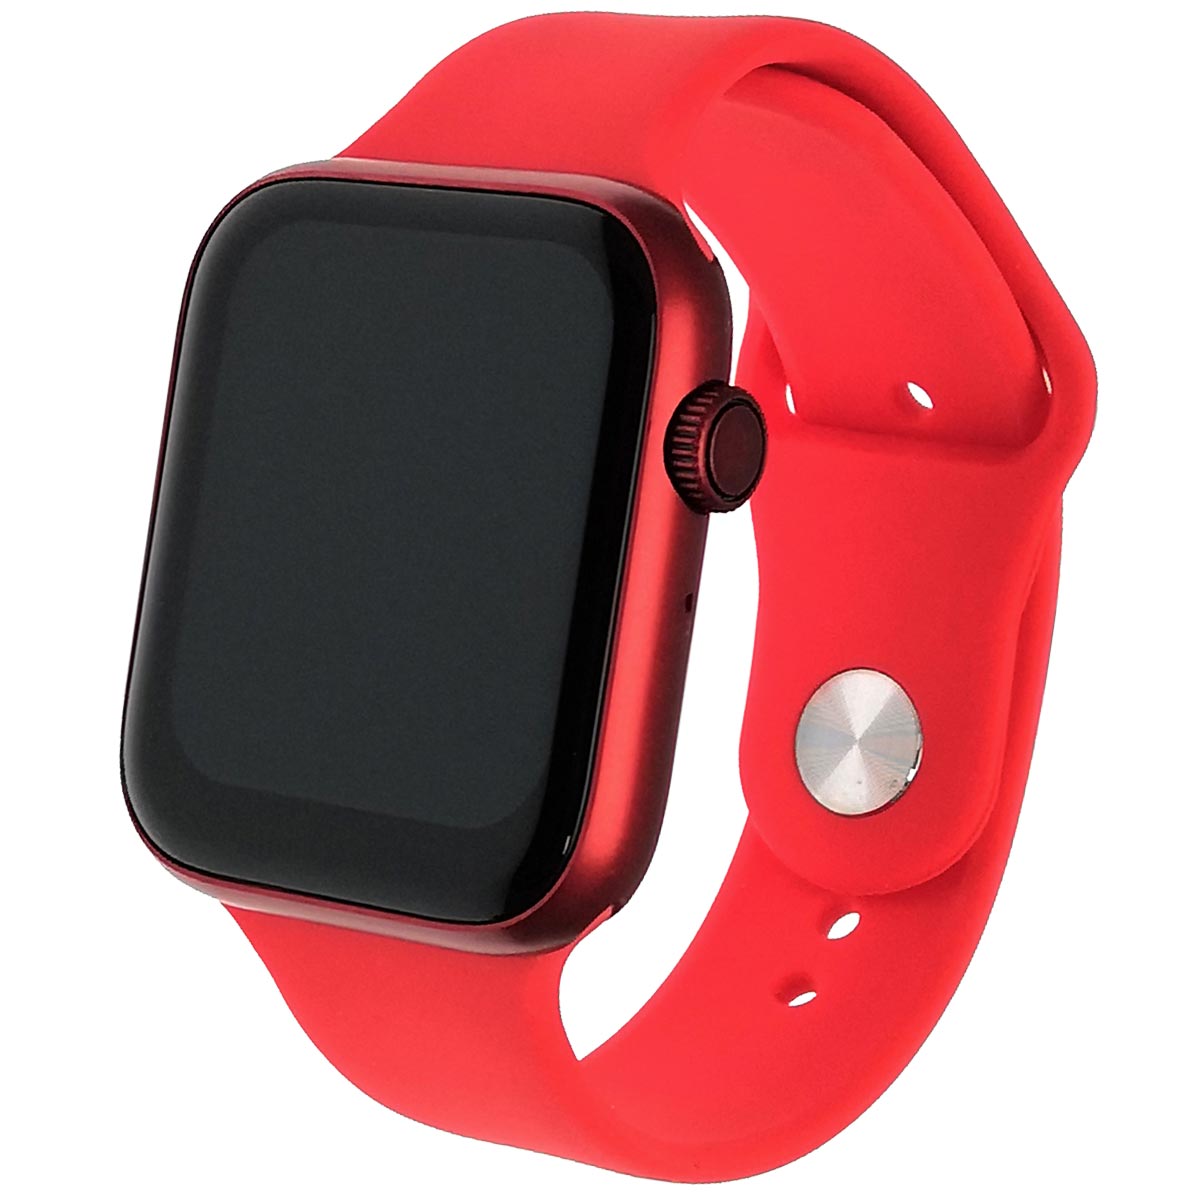 Смарт-часы Smart Watch AK76, Bluetooth, шагомер, датчик пульса, цвет красный